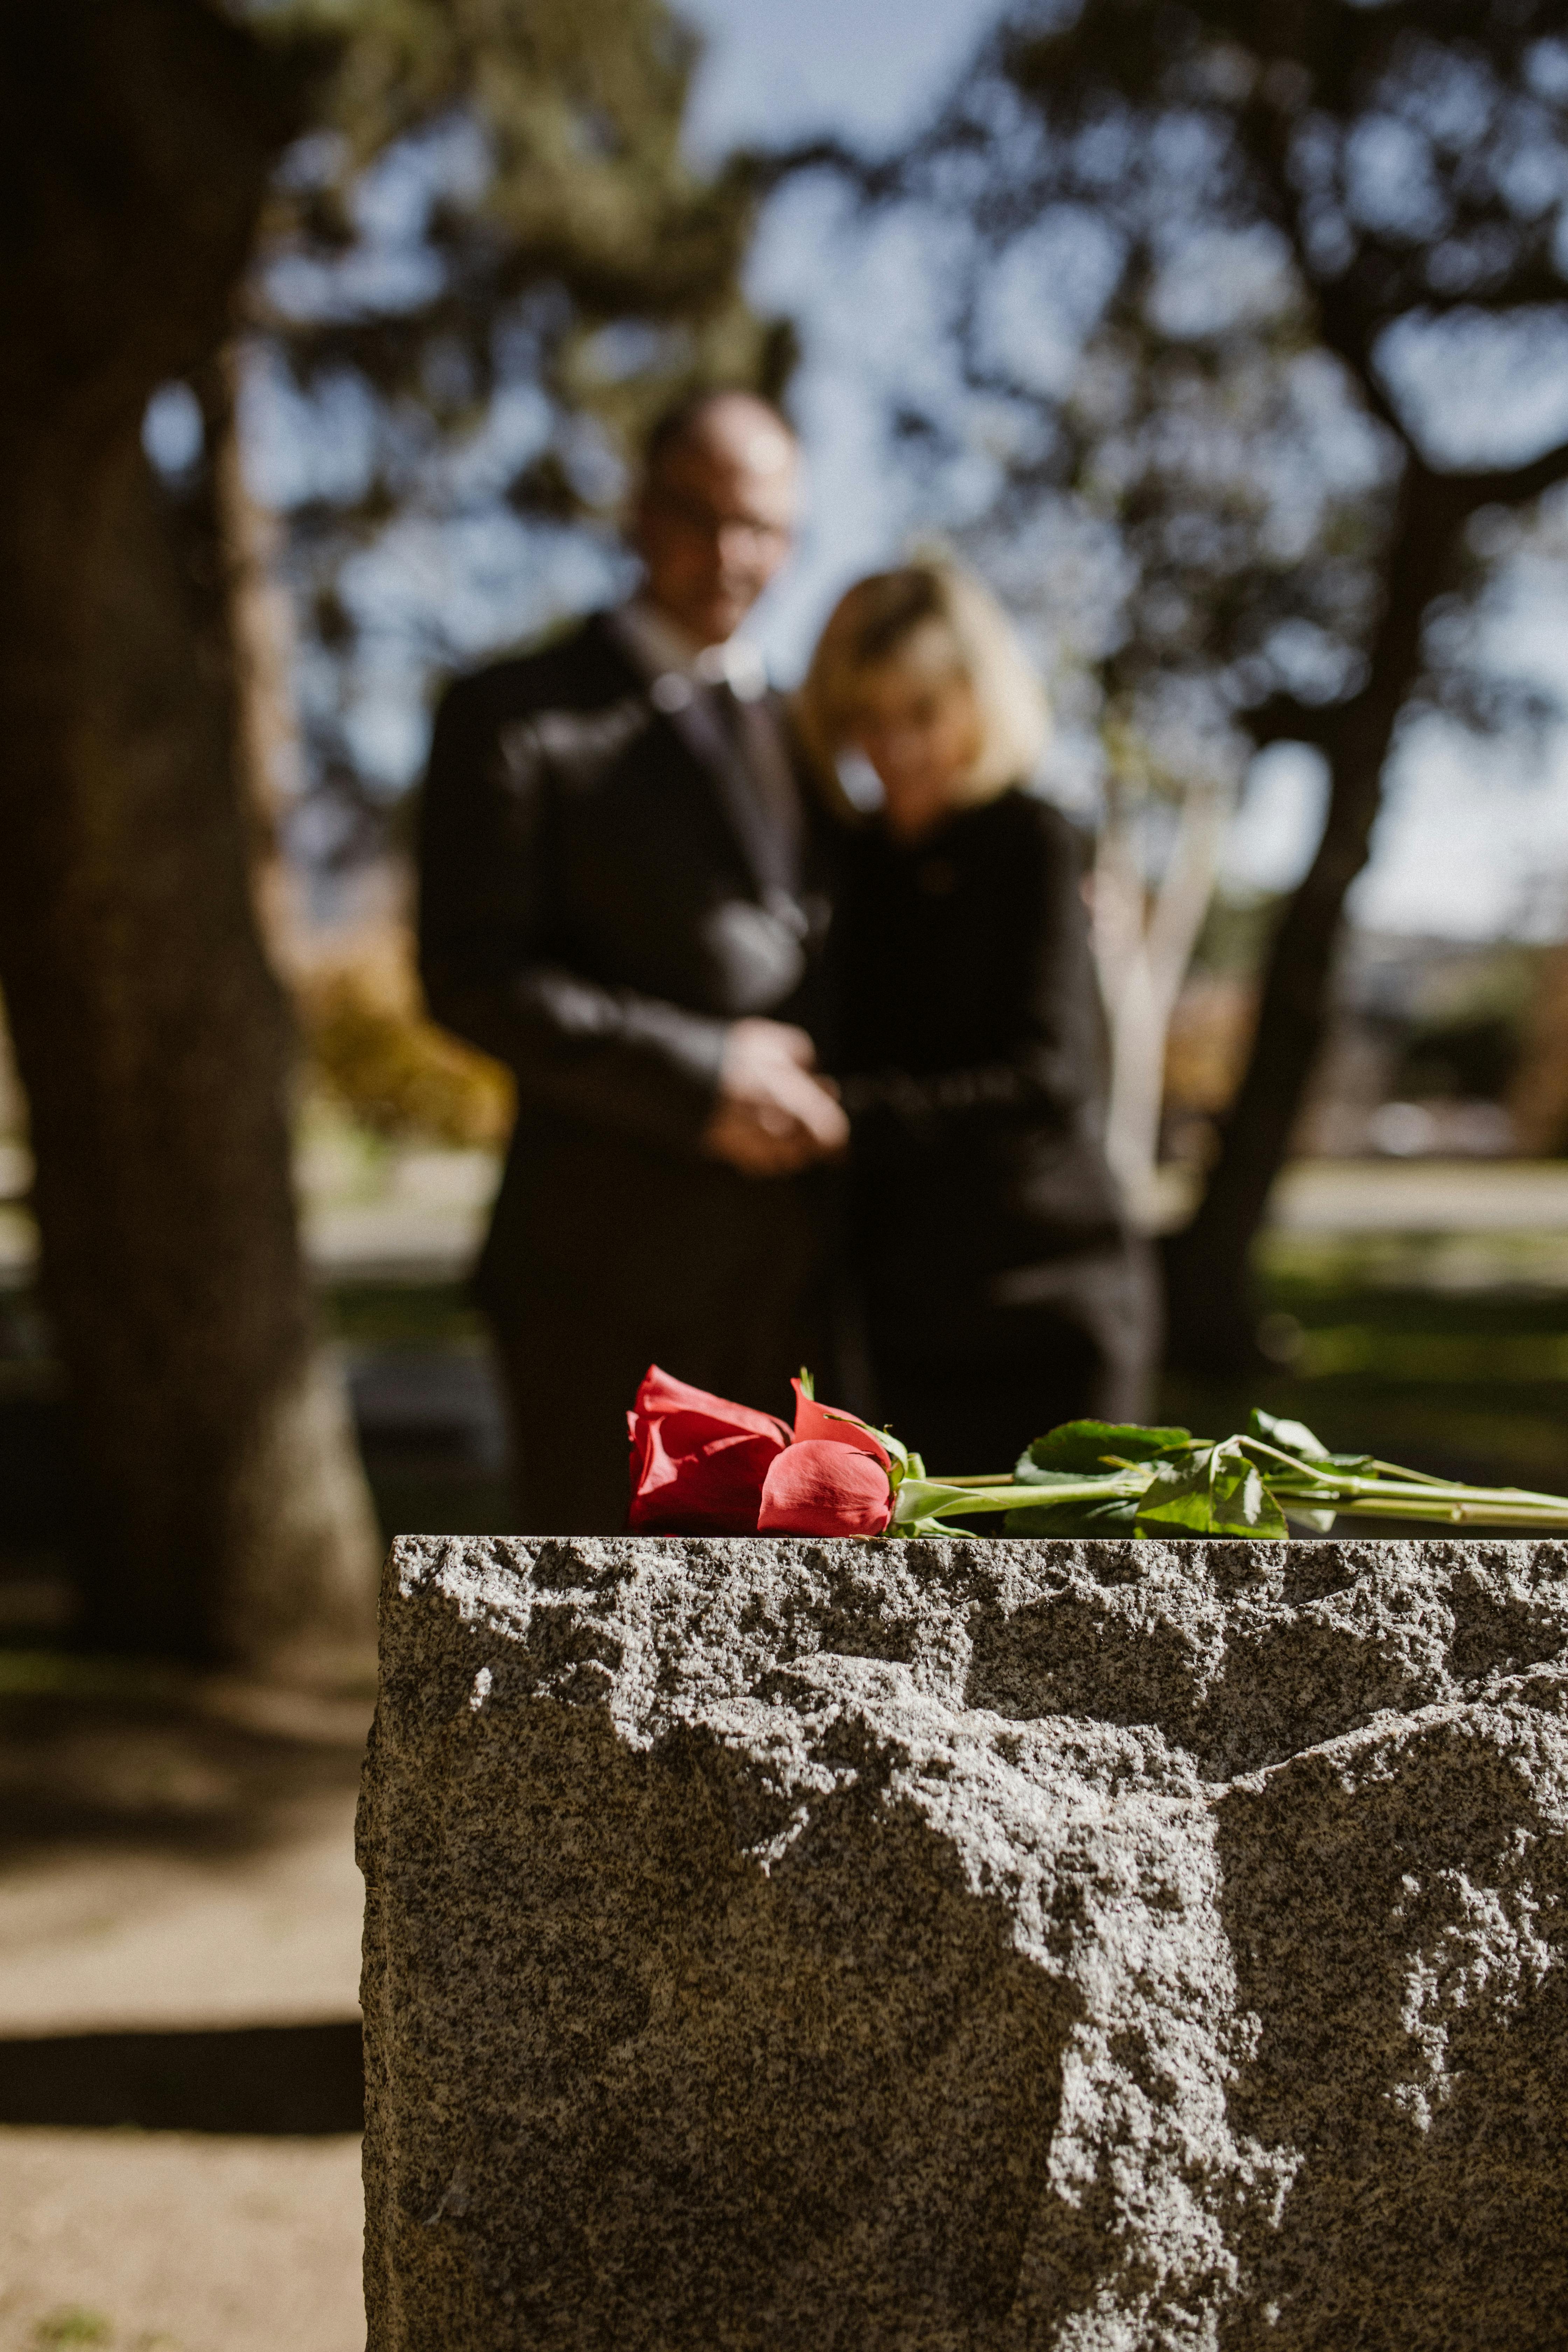 A couple by a grave | Source: Pexels